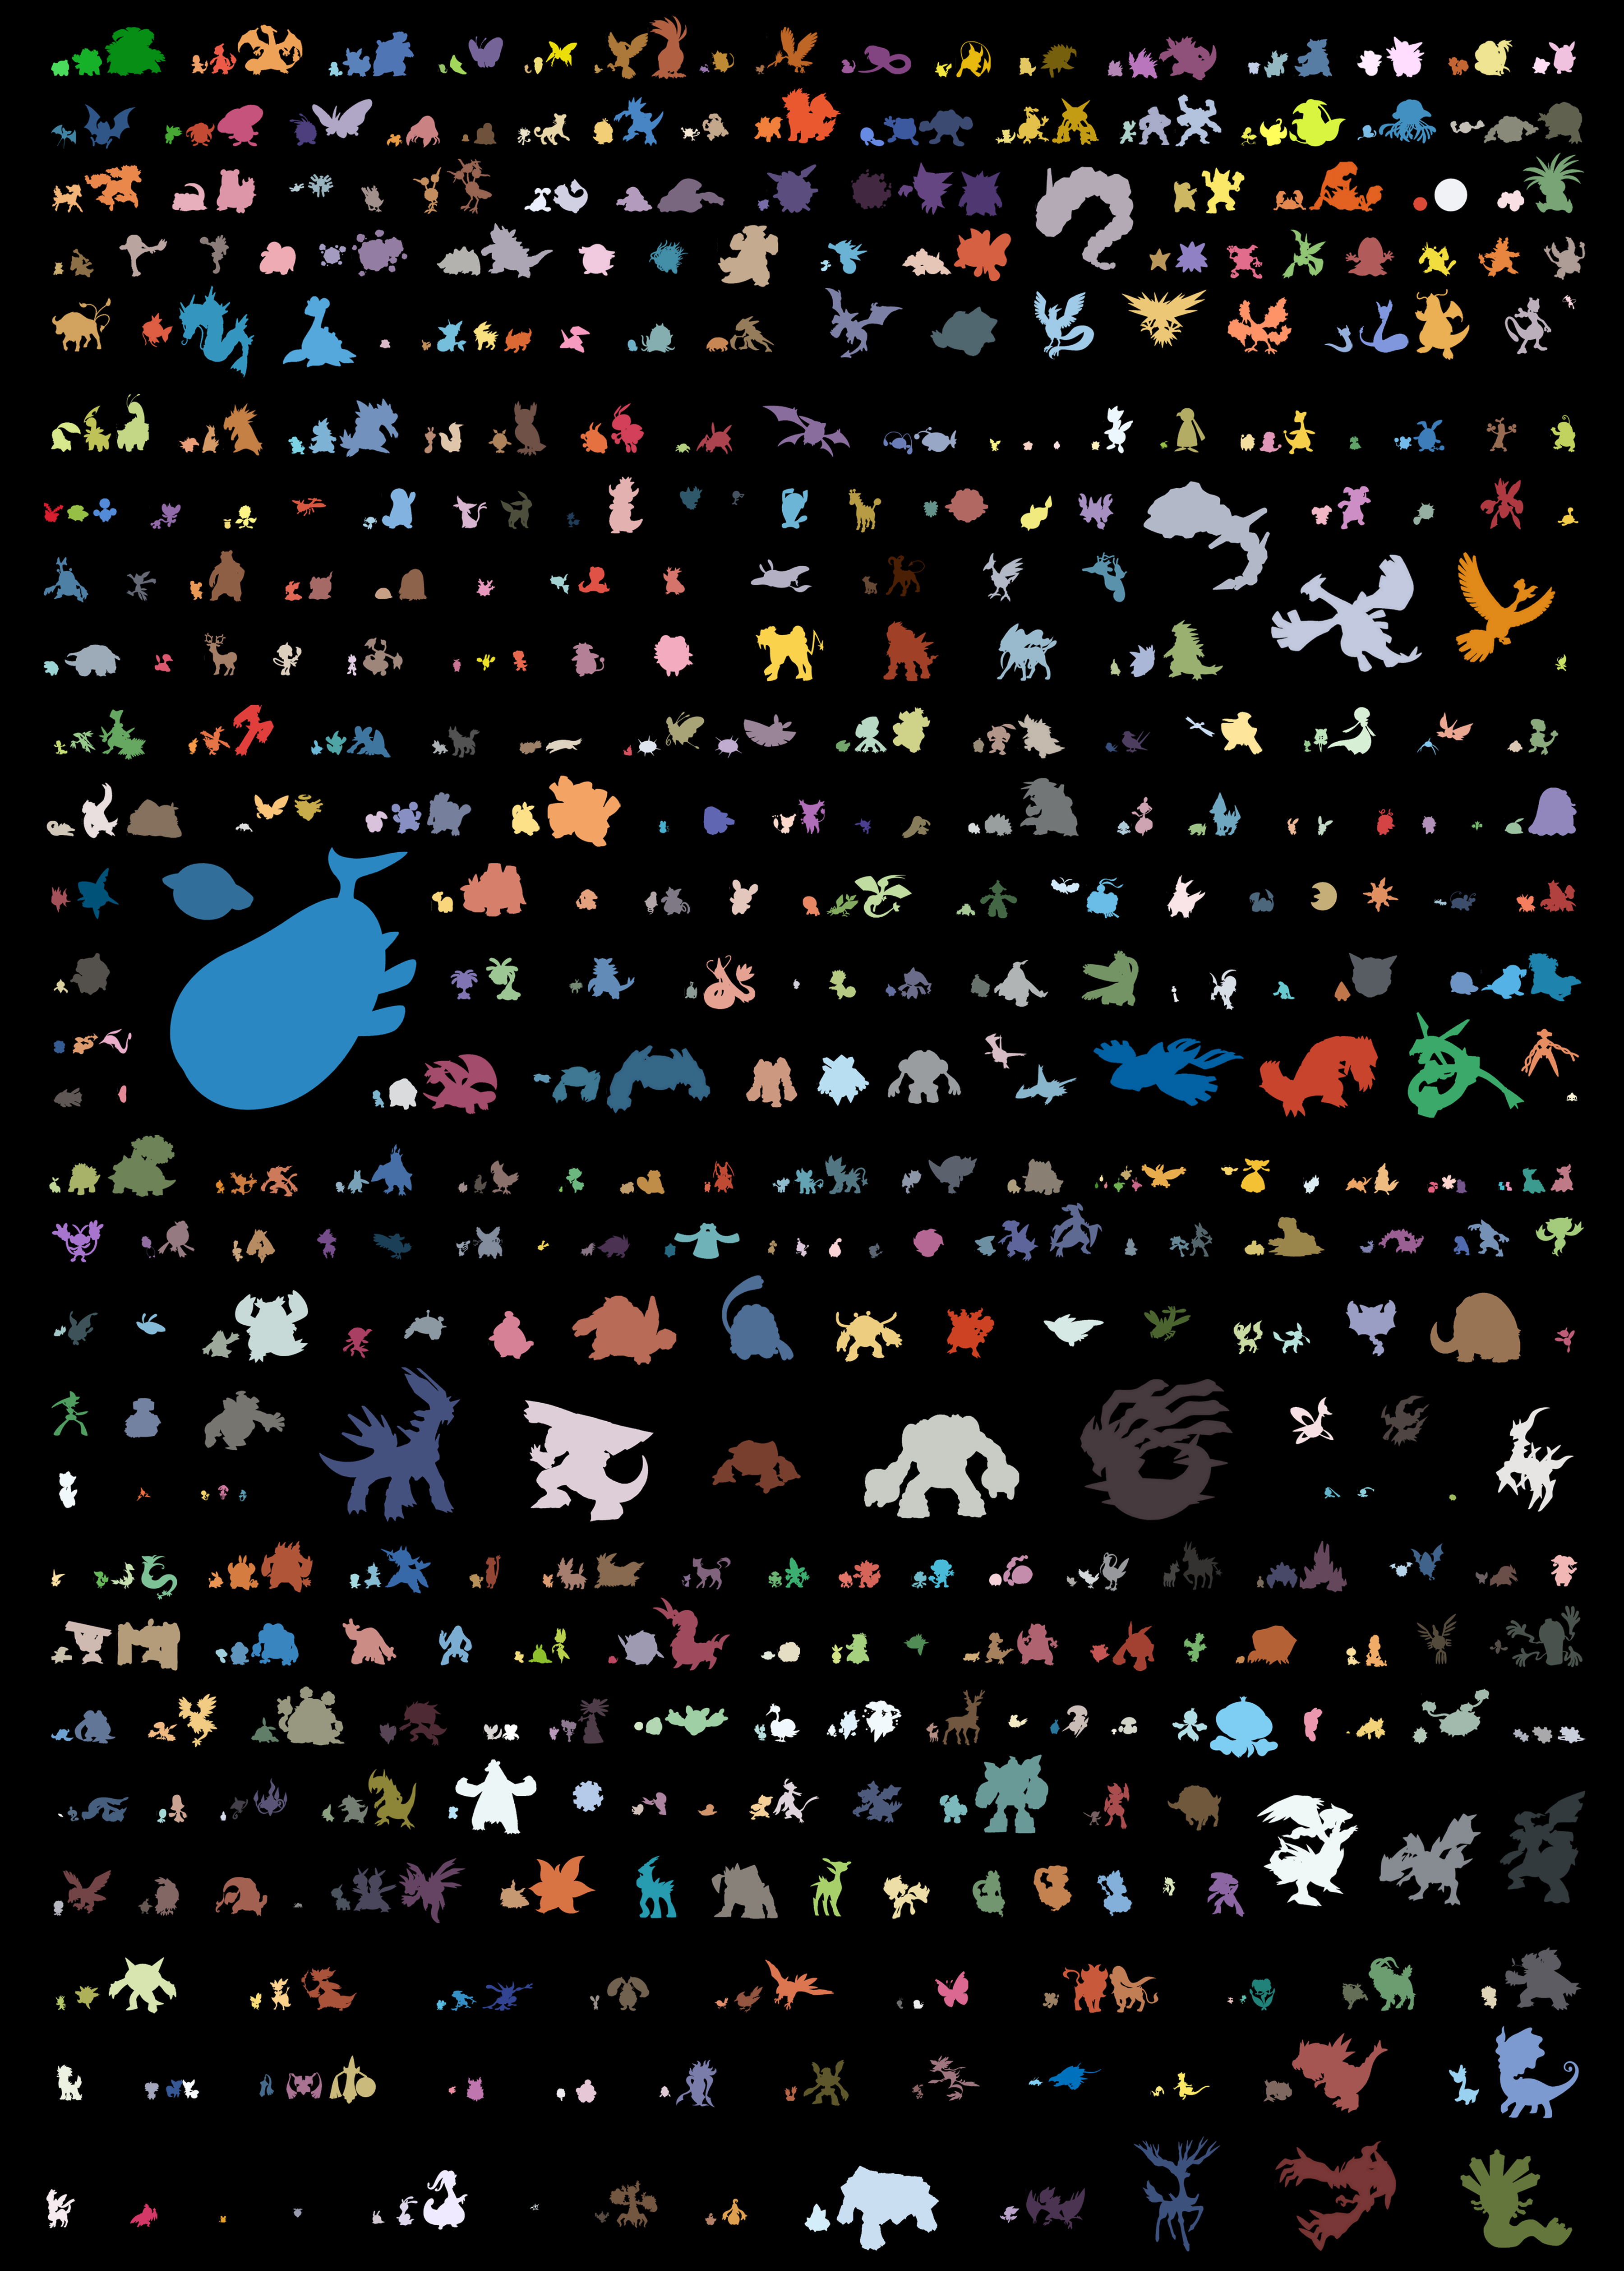 pokemon gen scale every chart ever deviantart actual comparison scaled comparisons handy pokedex entry imgur sizes reddit fs71 artist colors